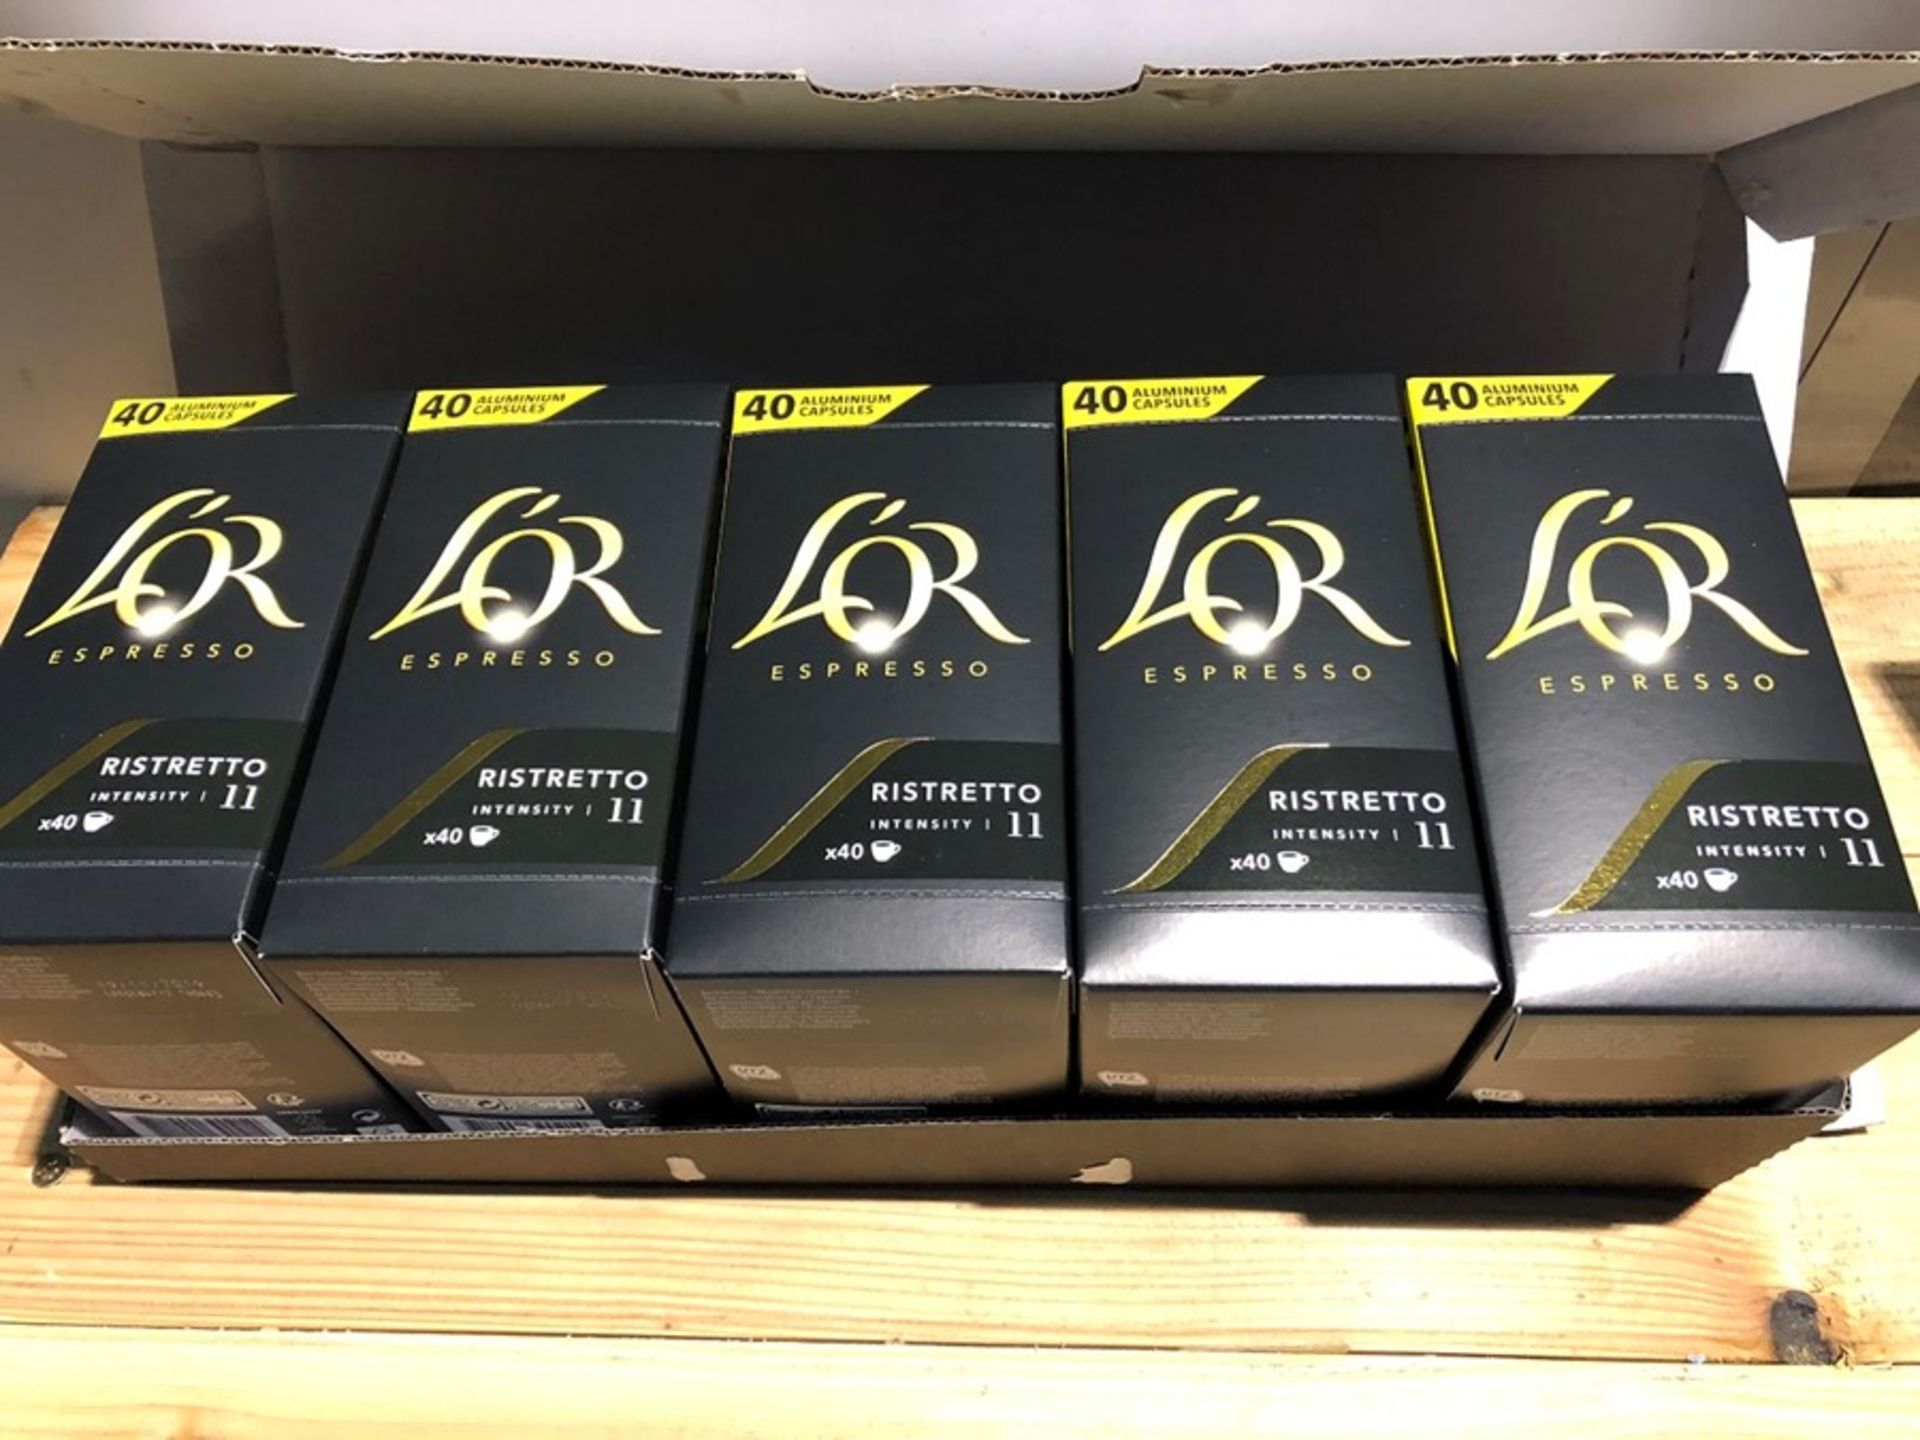 1 LOT TO CONTAIN 5 BOXES OF L'OR ESPRESSO RISTRETTO INTENSITY 11 COFFEE - 40 CAPSULES PER BOX / BEST